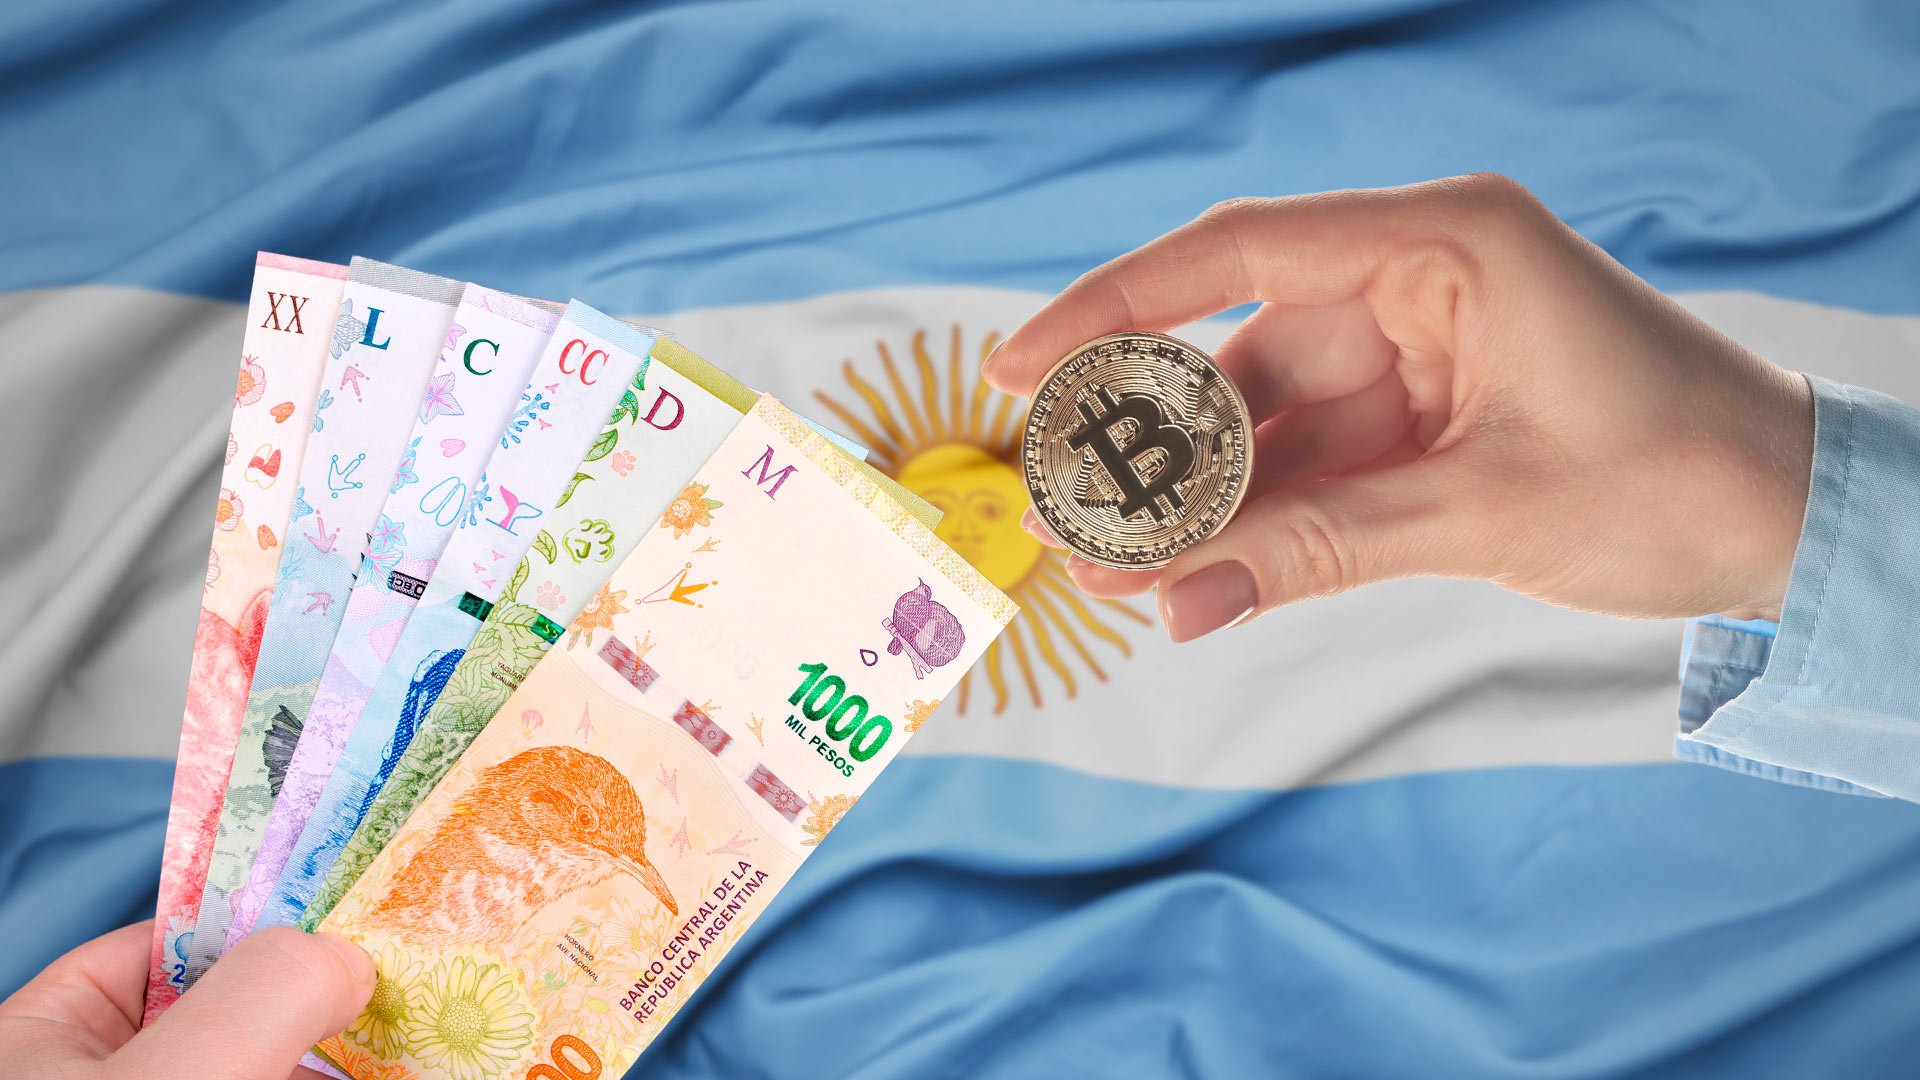 🔴 >> Argentina cambiará a pesos las criptomonedas incautadas a hacker